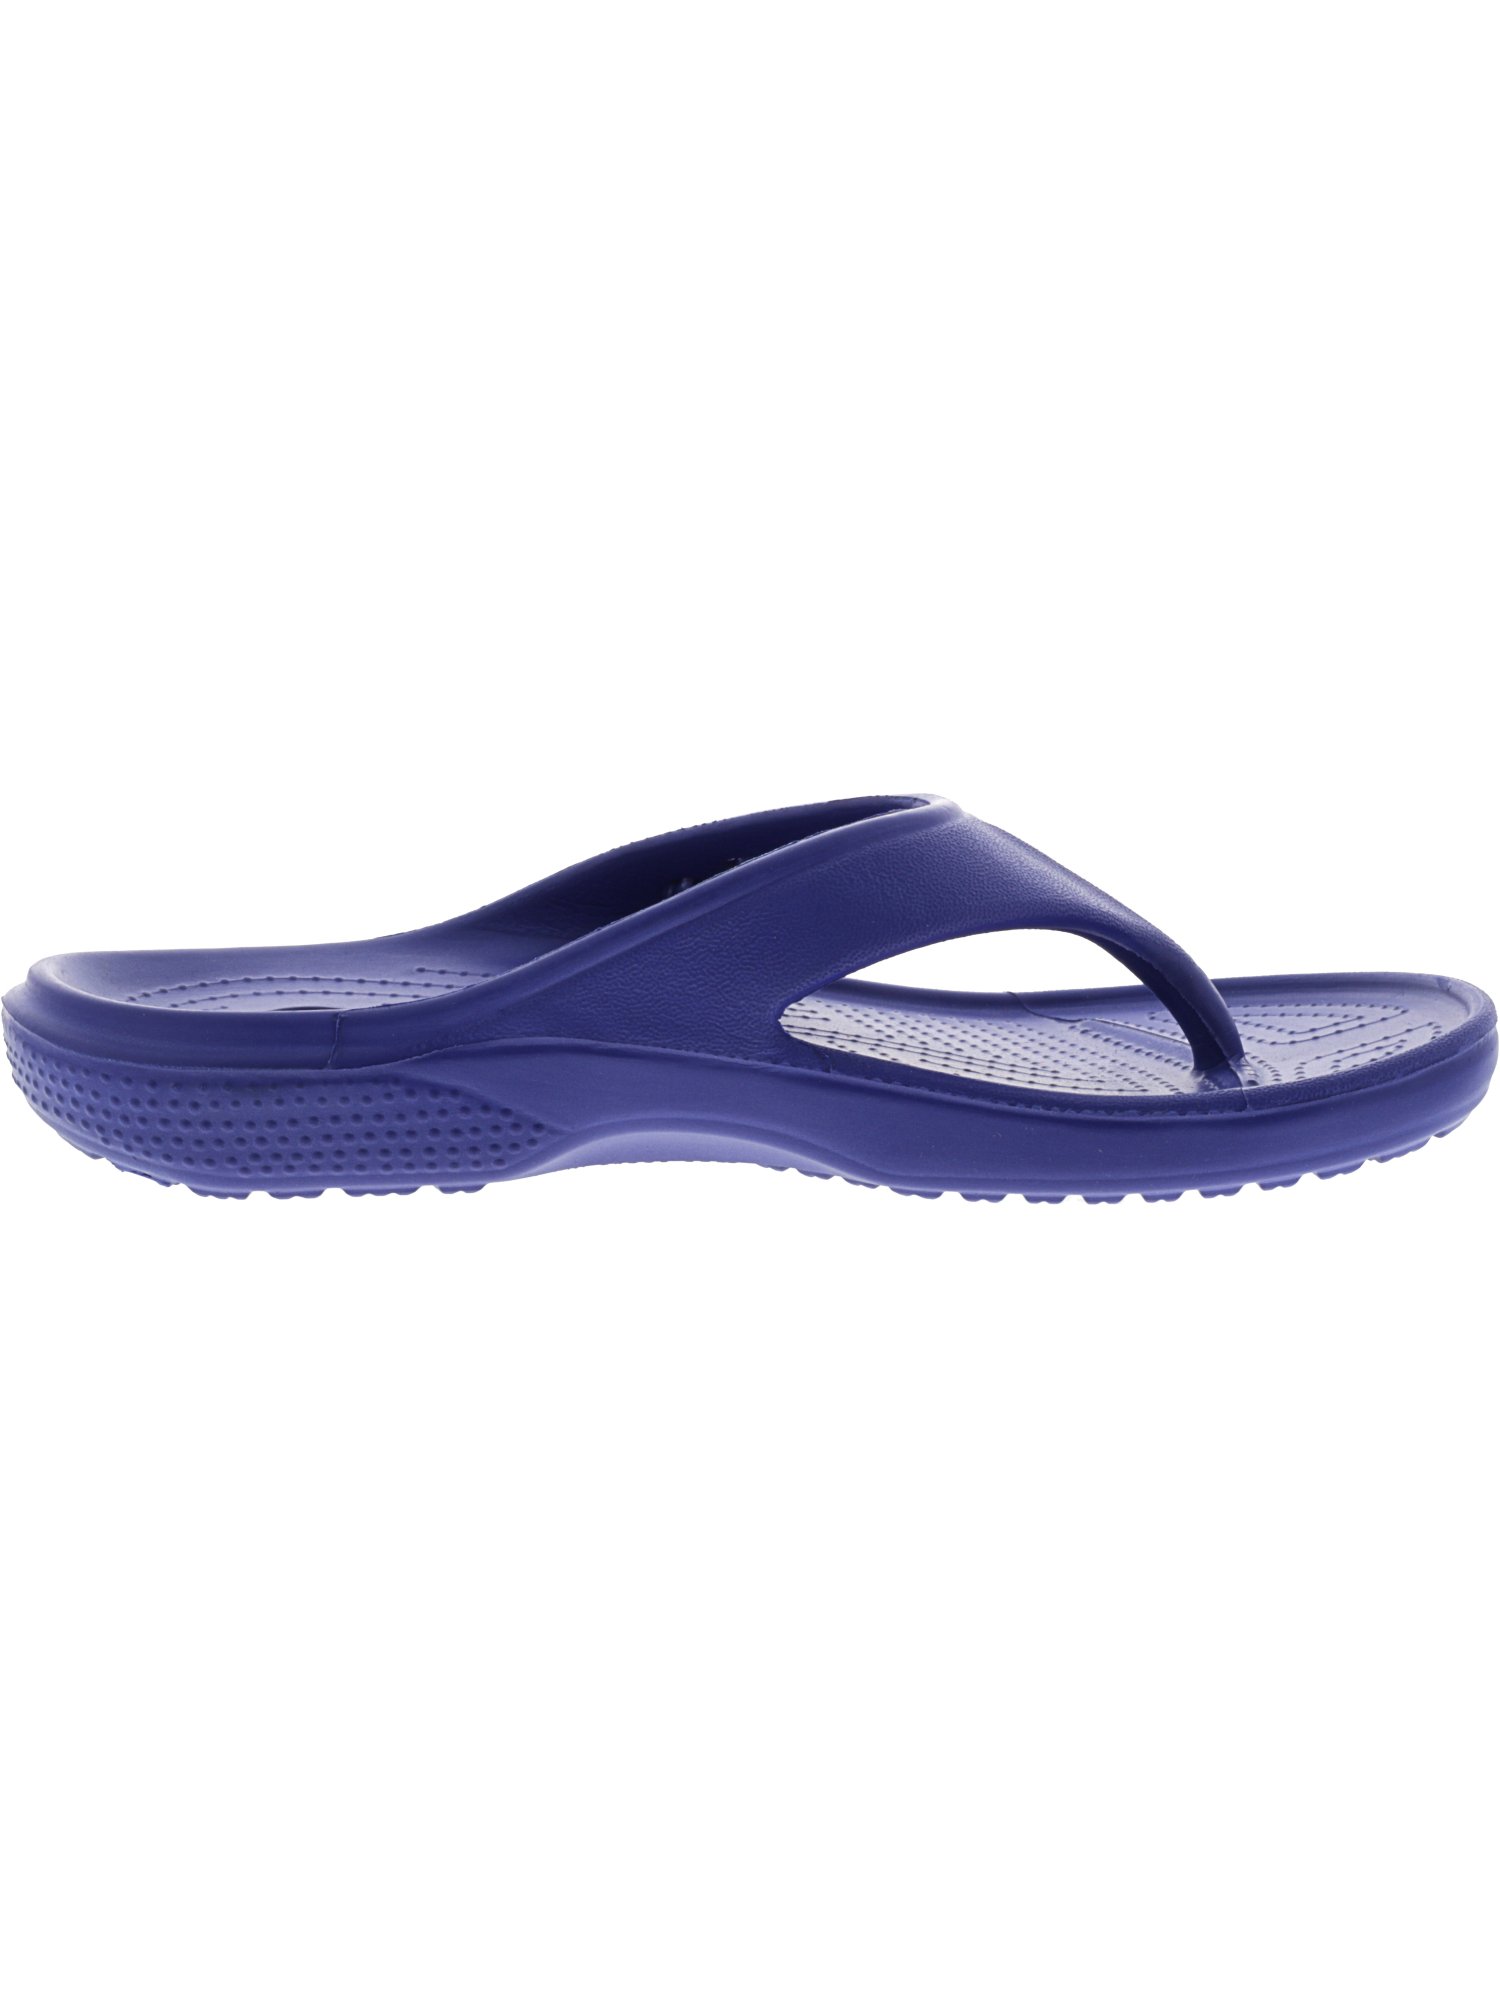 Crocs Baya Flip Sandal | eBay